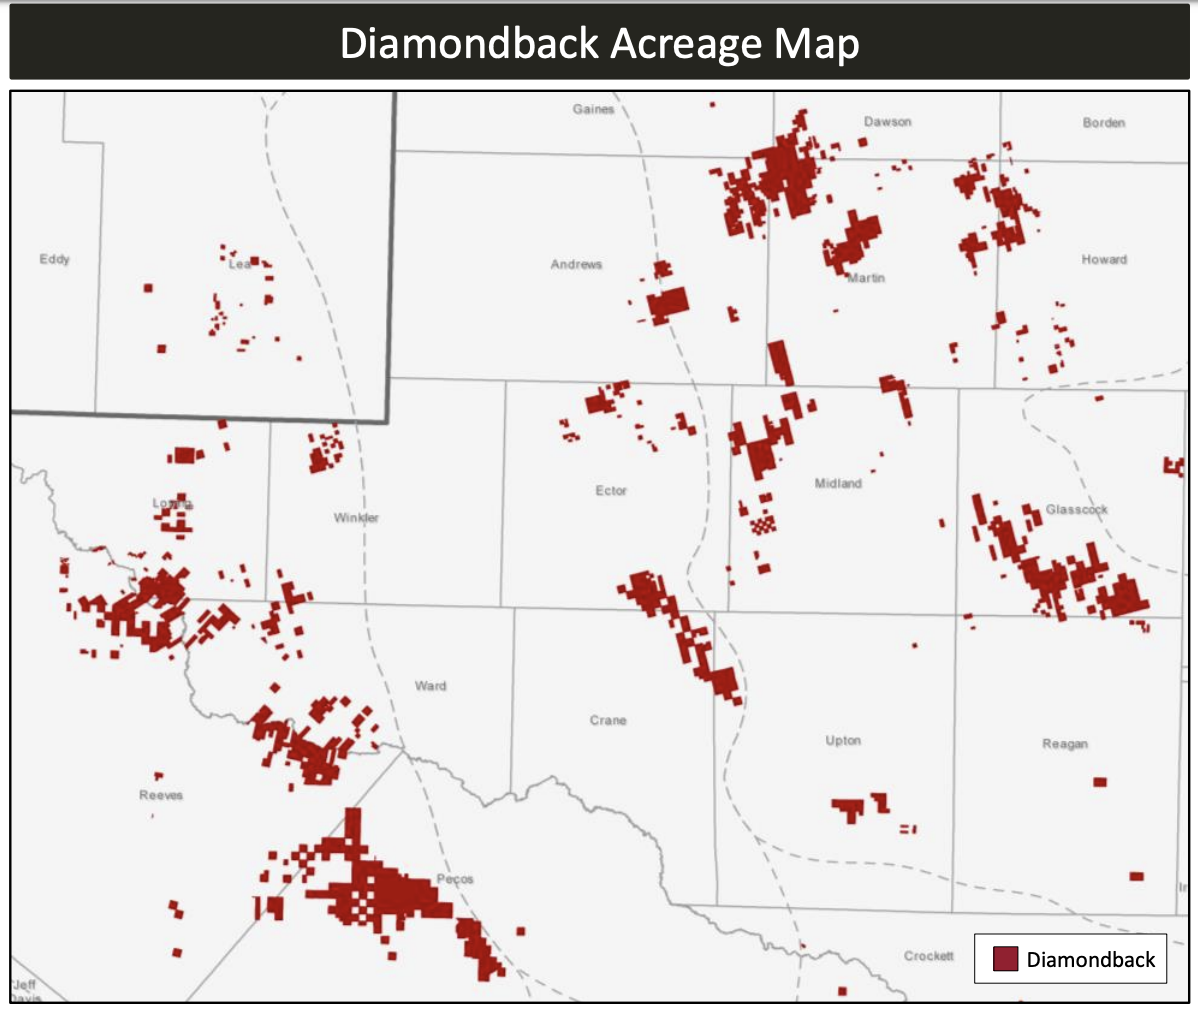 Diamondback Acreage Map (Source: Diamondback Energy Inc. August 2020 Investor Presentation)